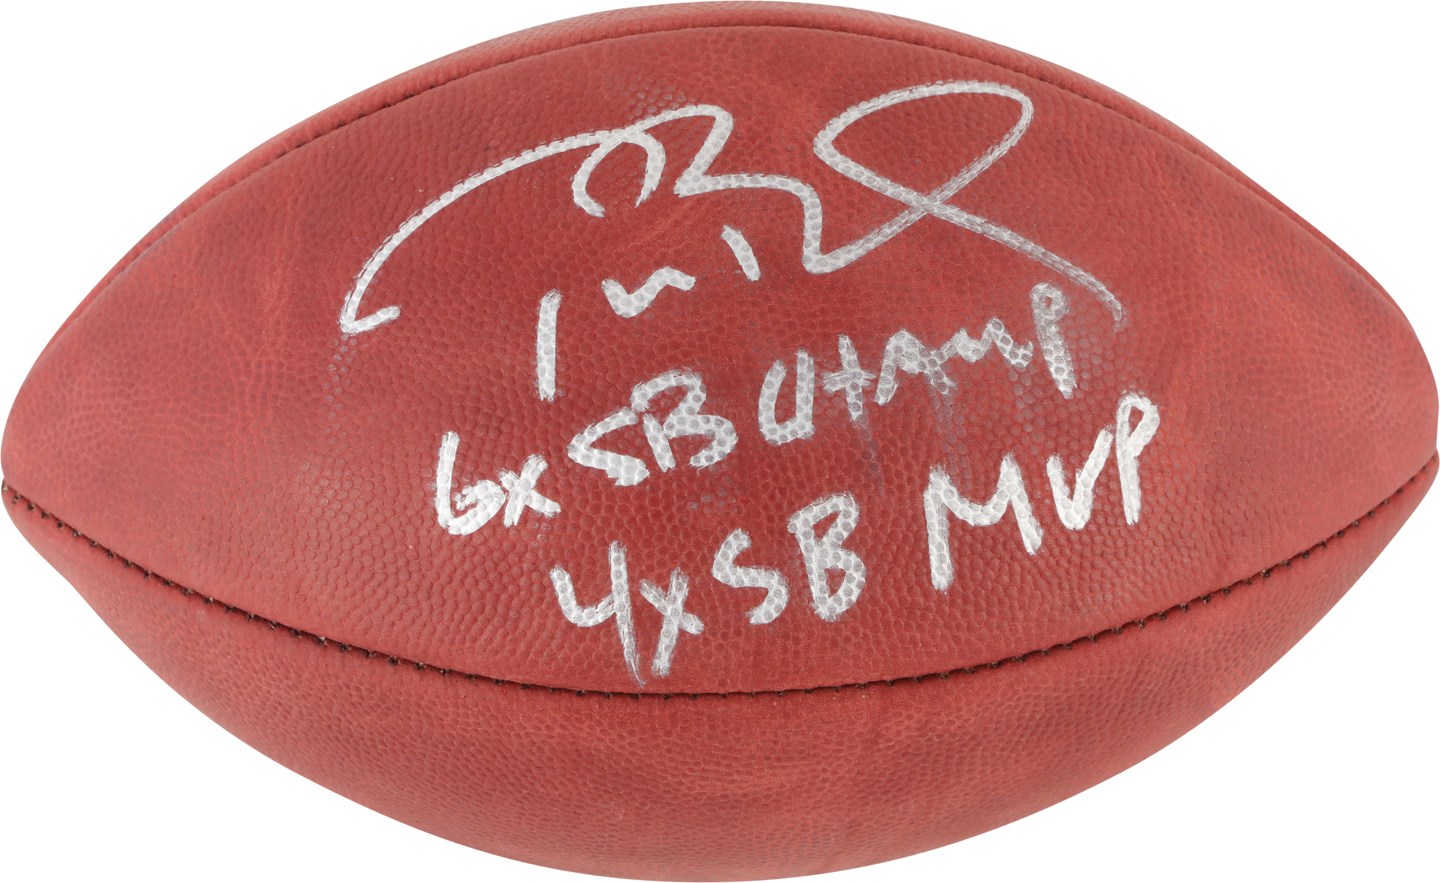 - Tom Brady Specially Inscribed Official Super Bowl LIII Football ("6X SB Champ 4XSB MVP")